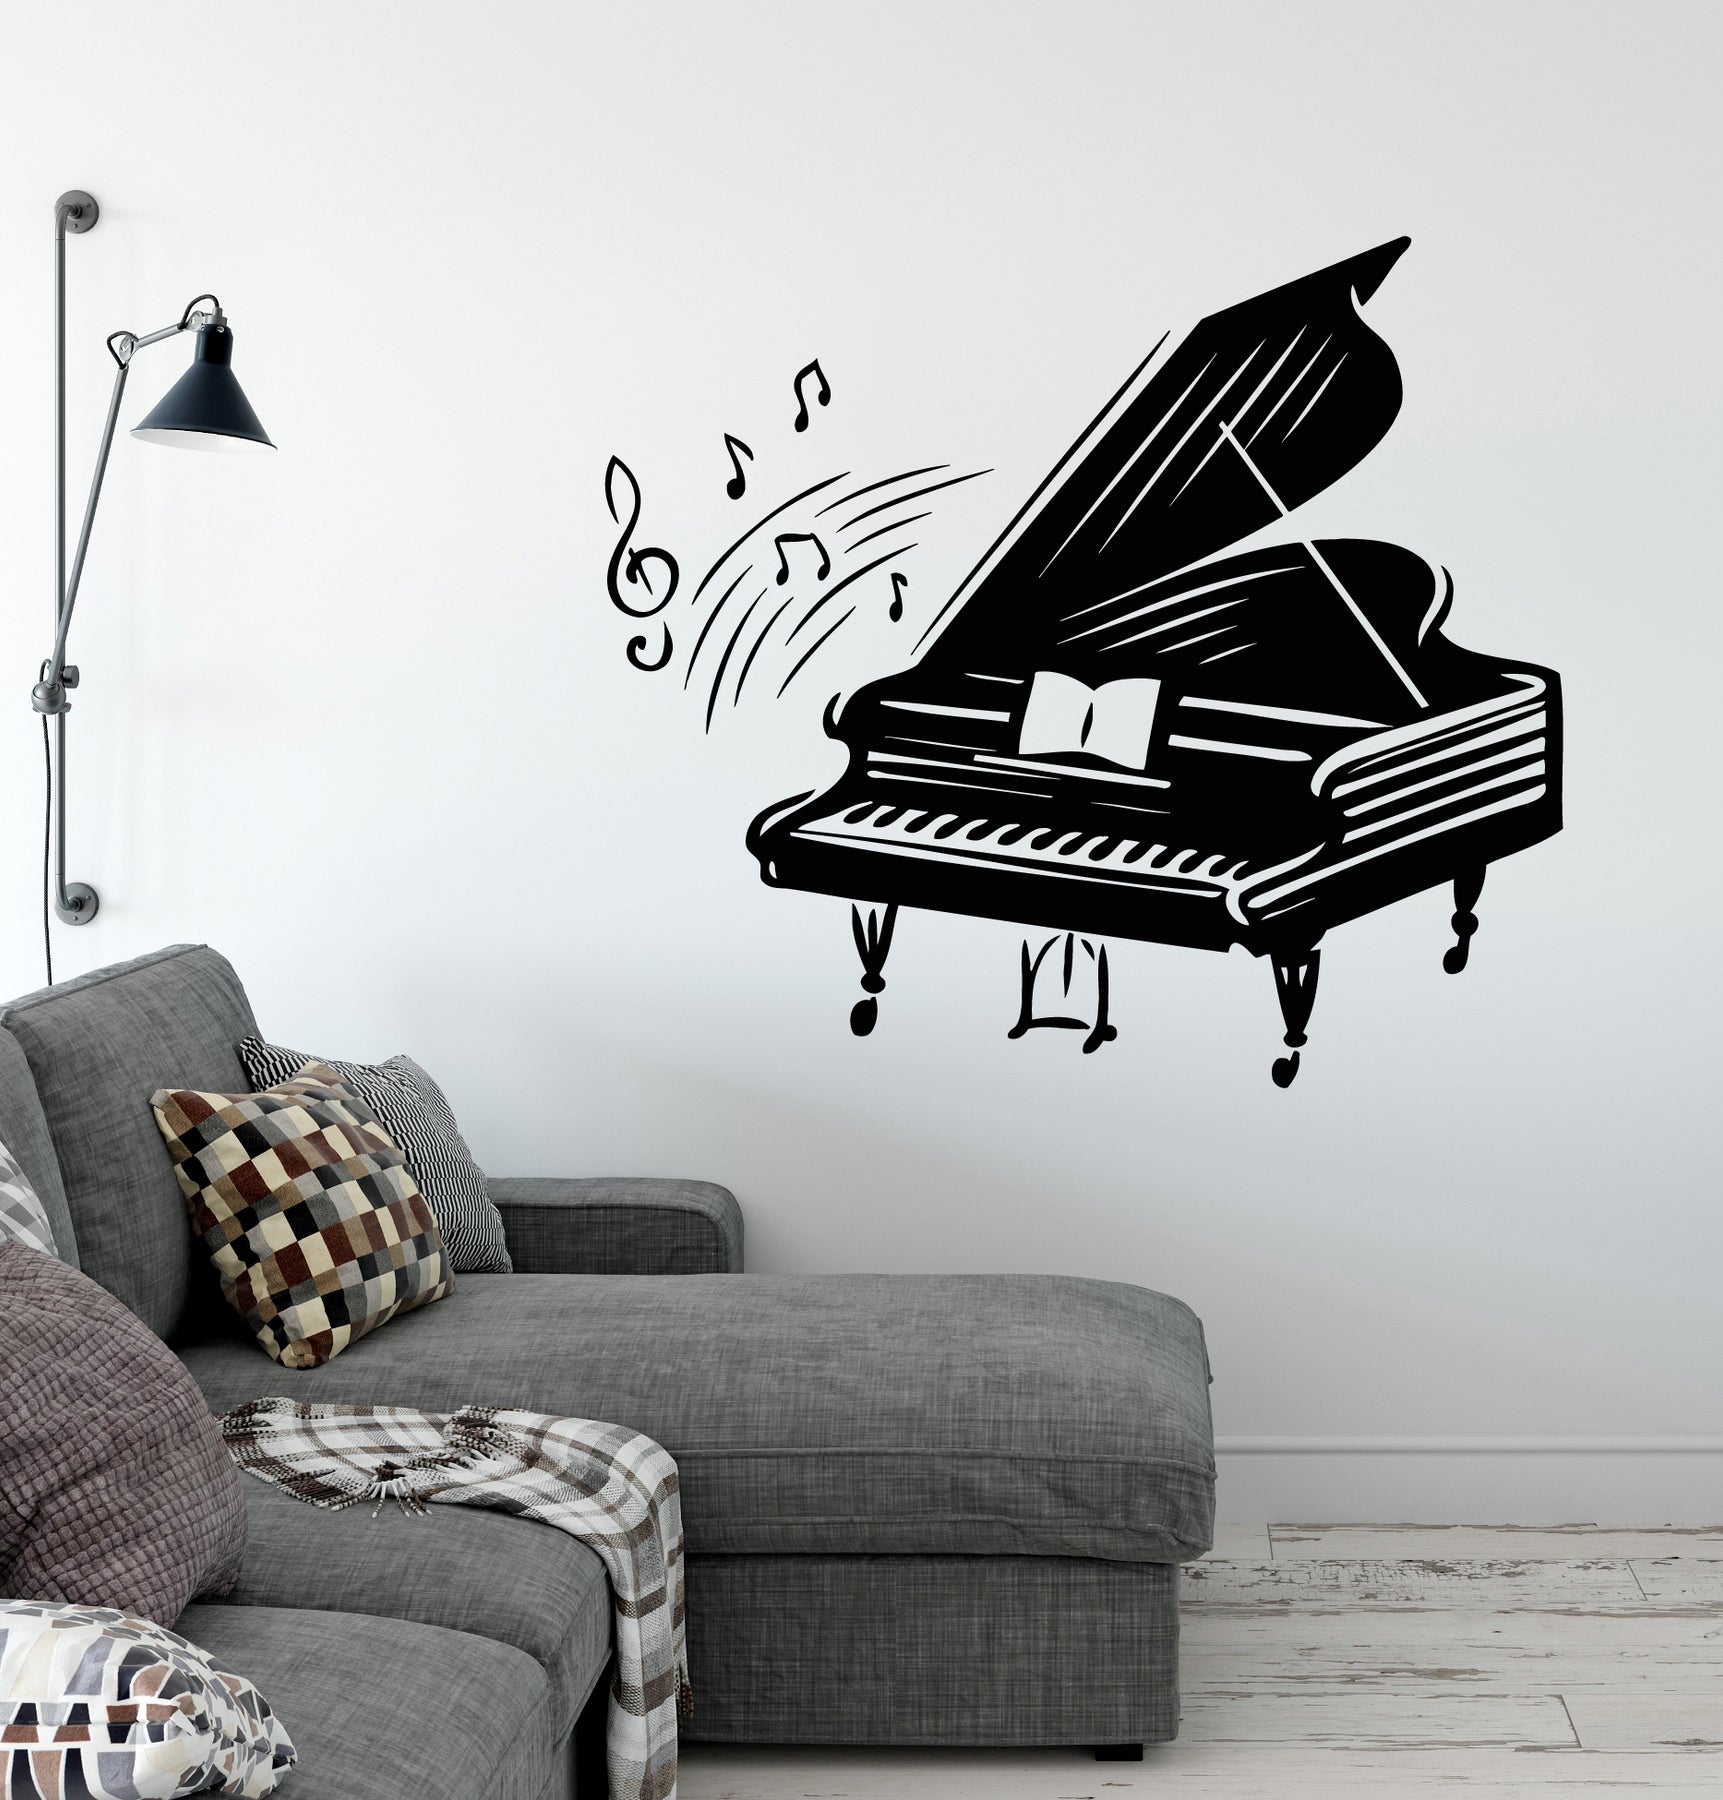 Autocollant mural pour piano Sticker autocollant musical